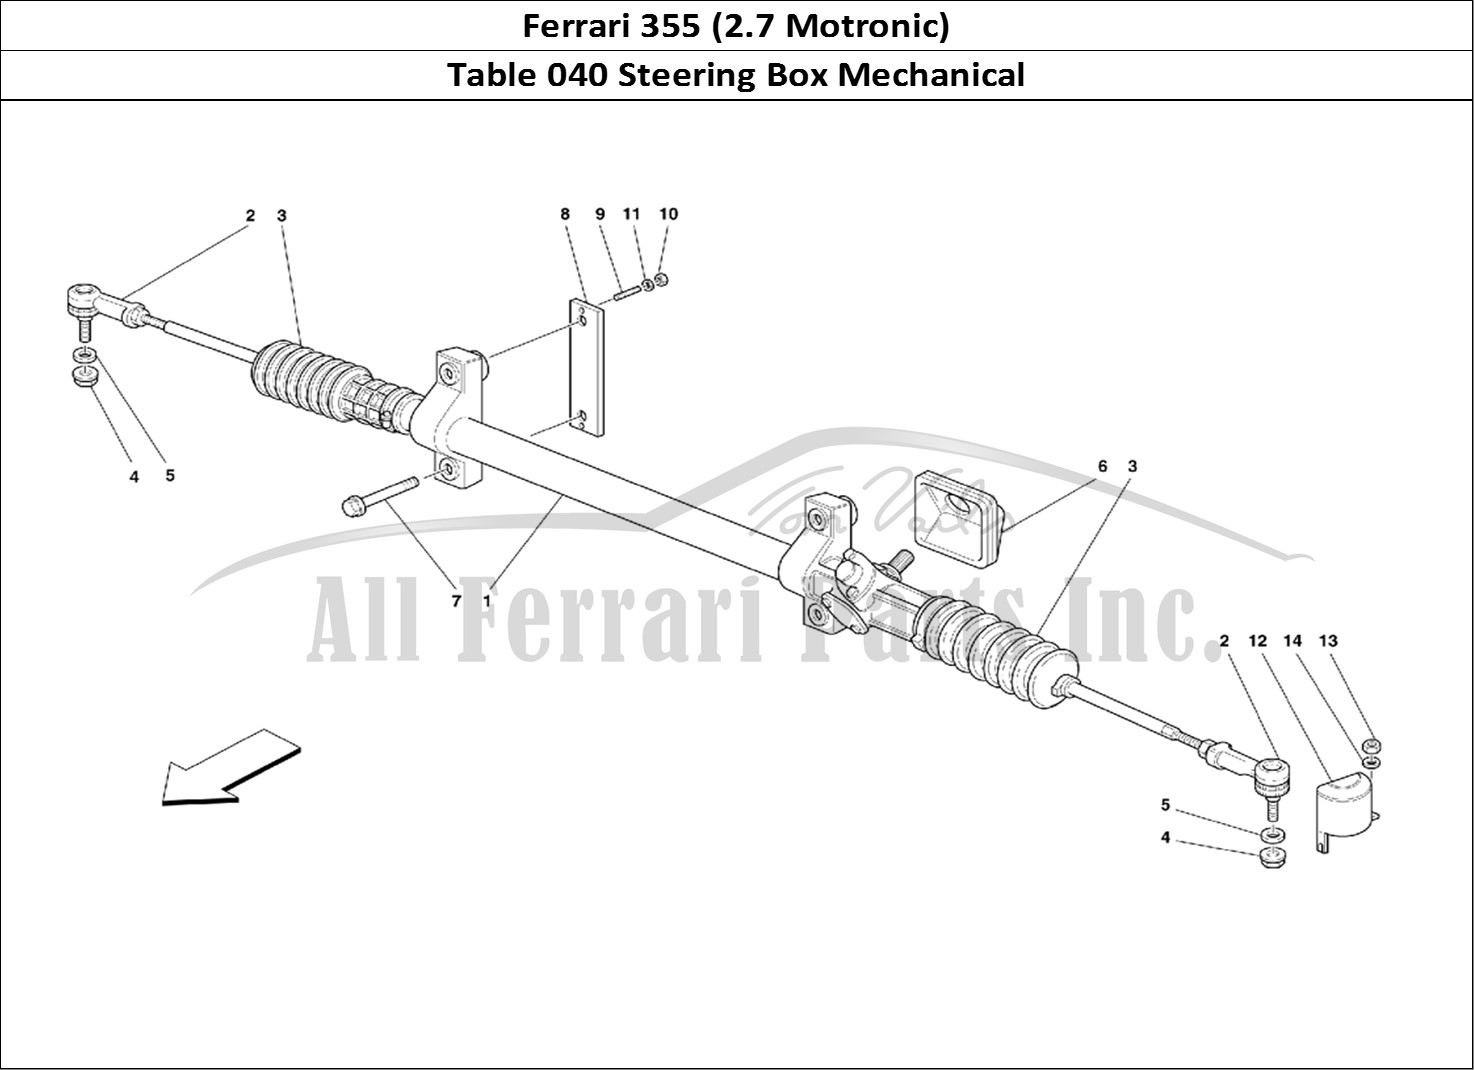 Ferrari Parts Ferrari 355 (2.7 Motronic) Page 040 Mechanical Steering Box -